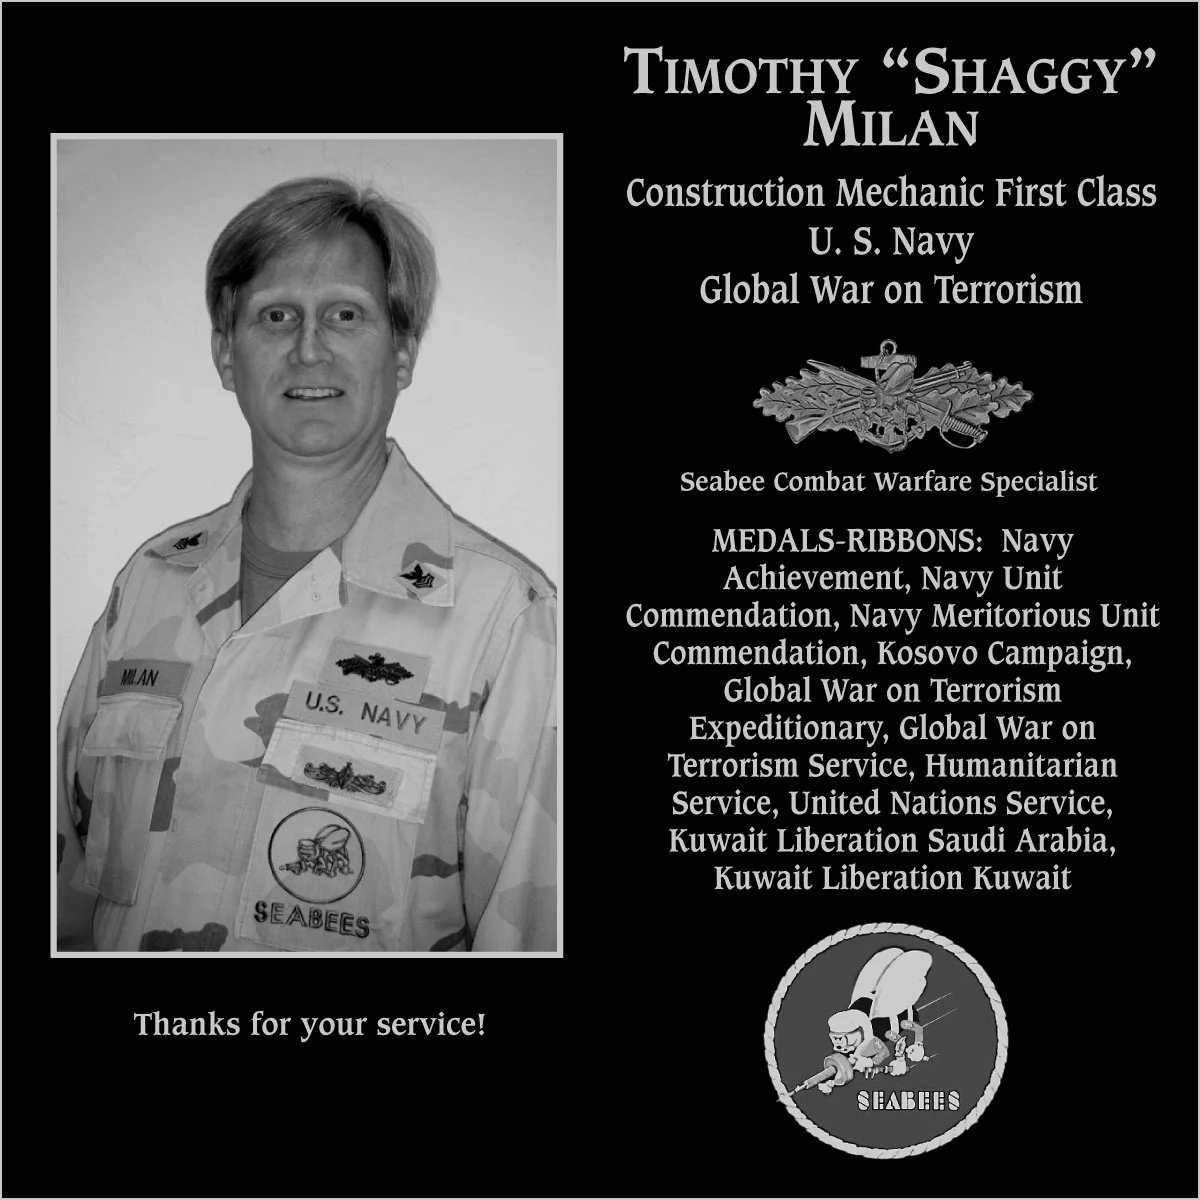 Timothy “Shaggy” Milan